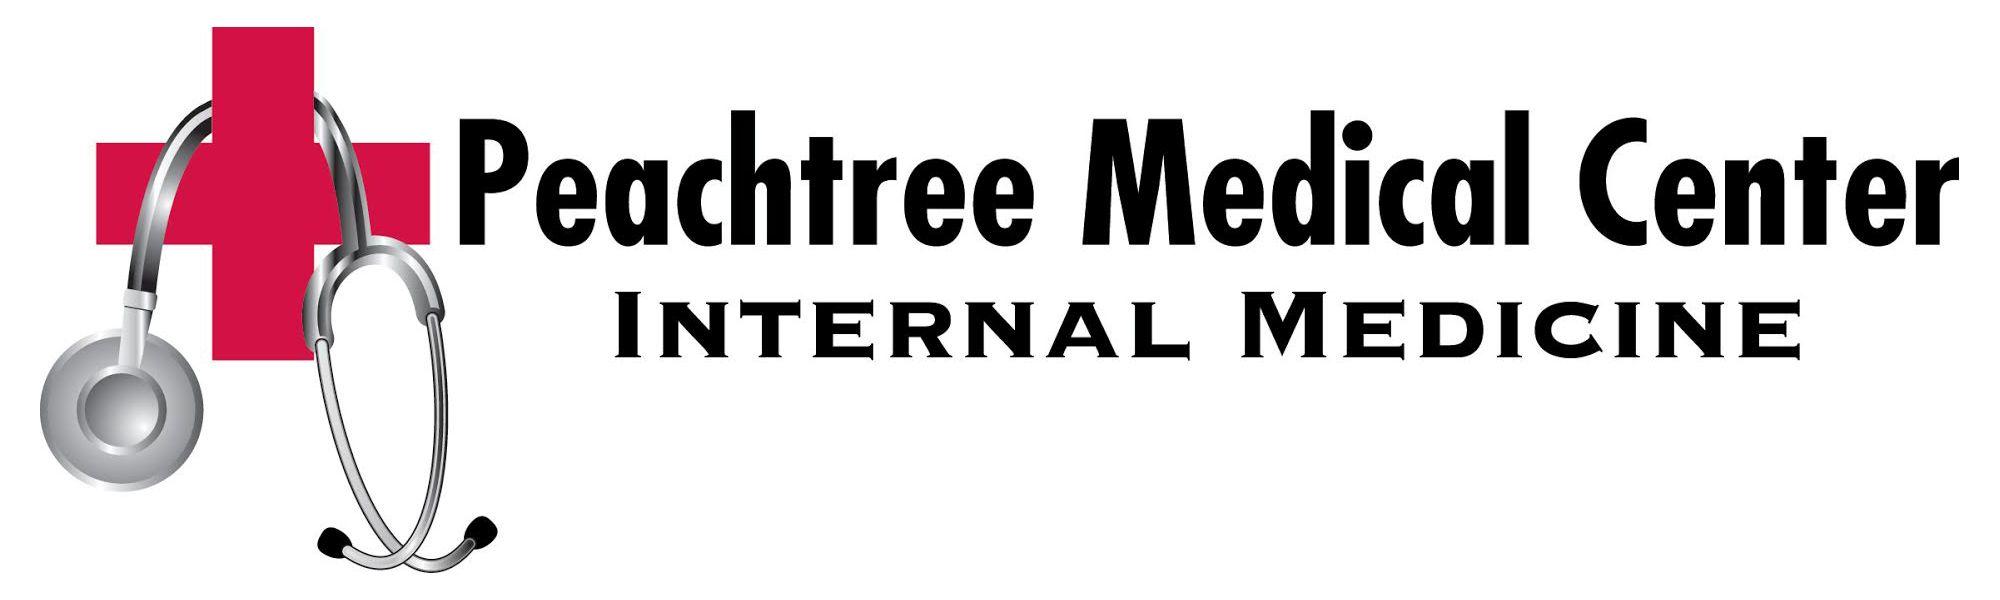 Peachtree Logo - Primary Care Peachtree City, GA | Family Medicine Near Me ...